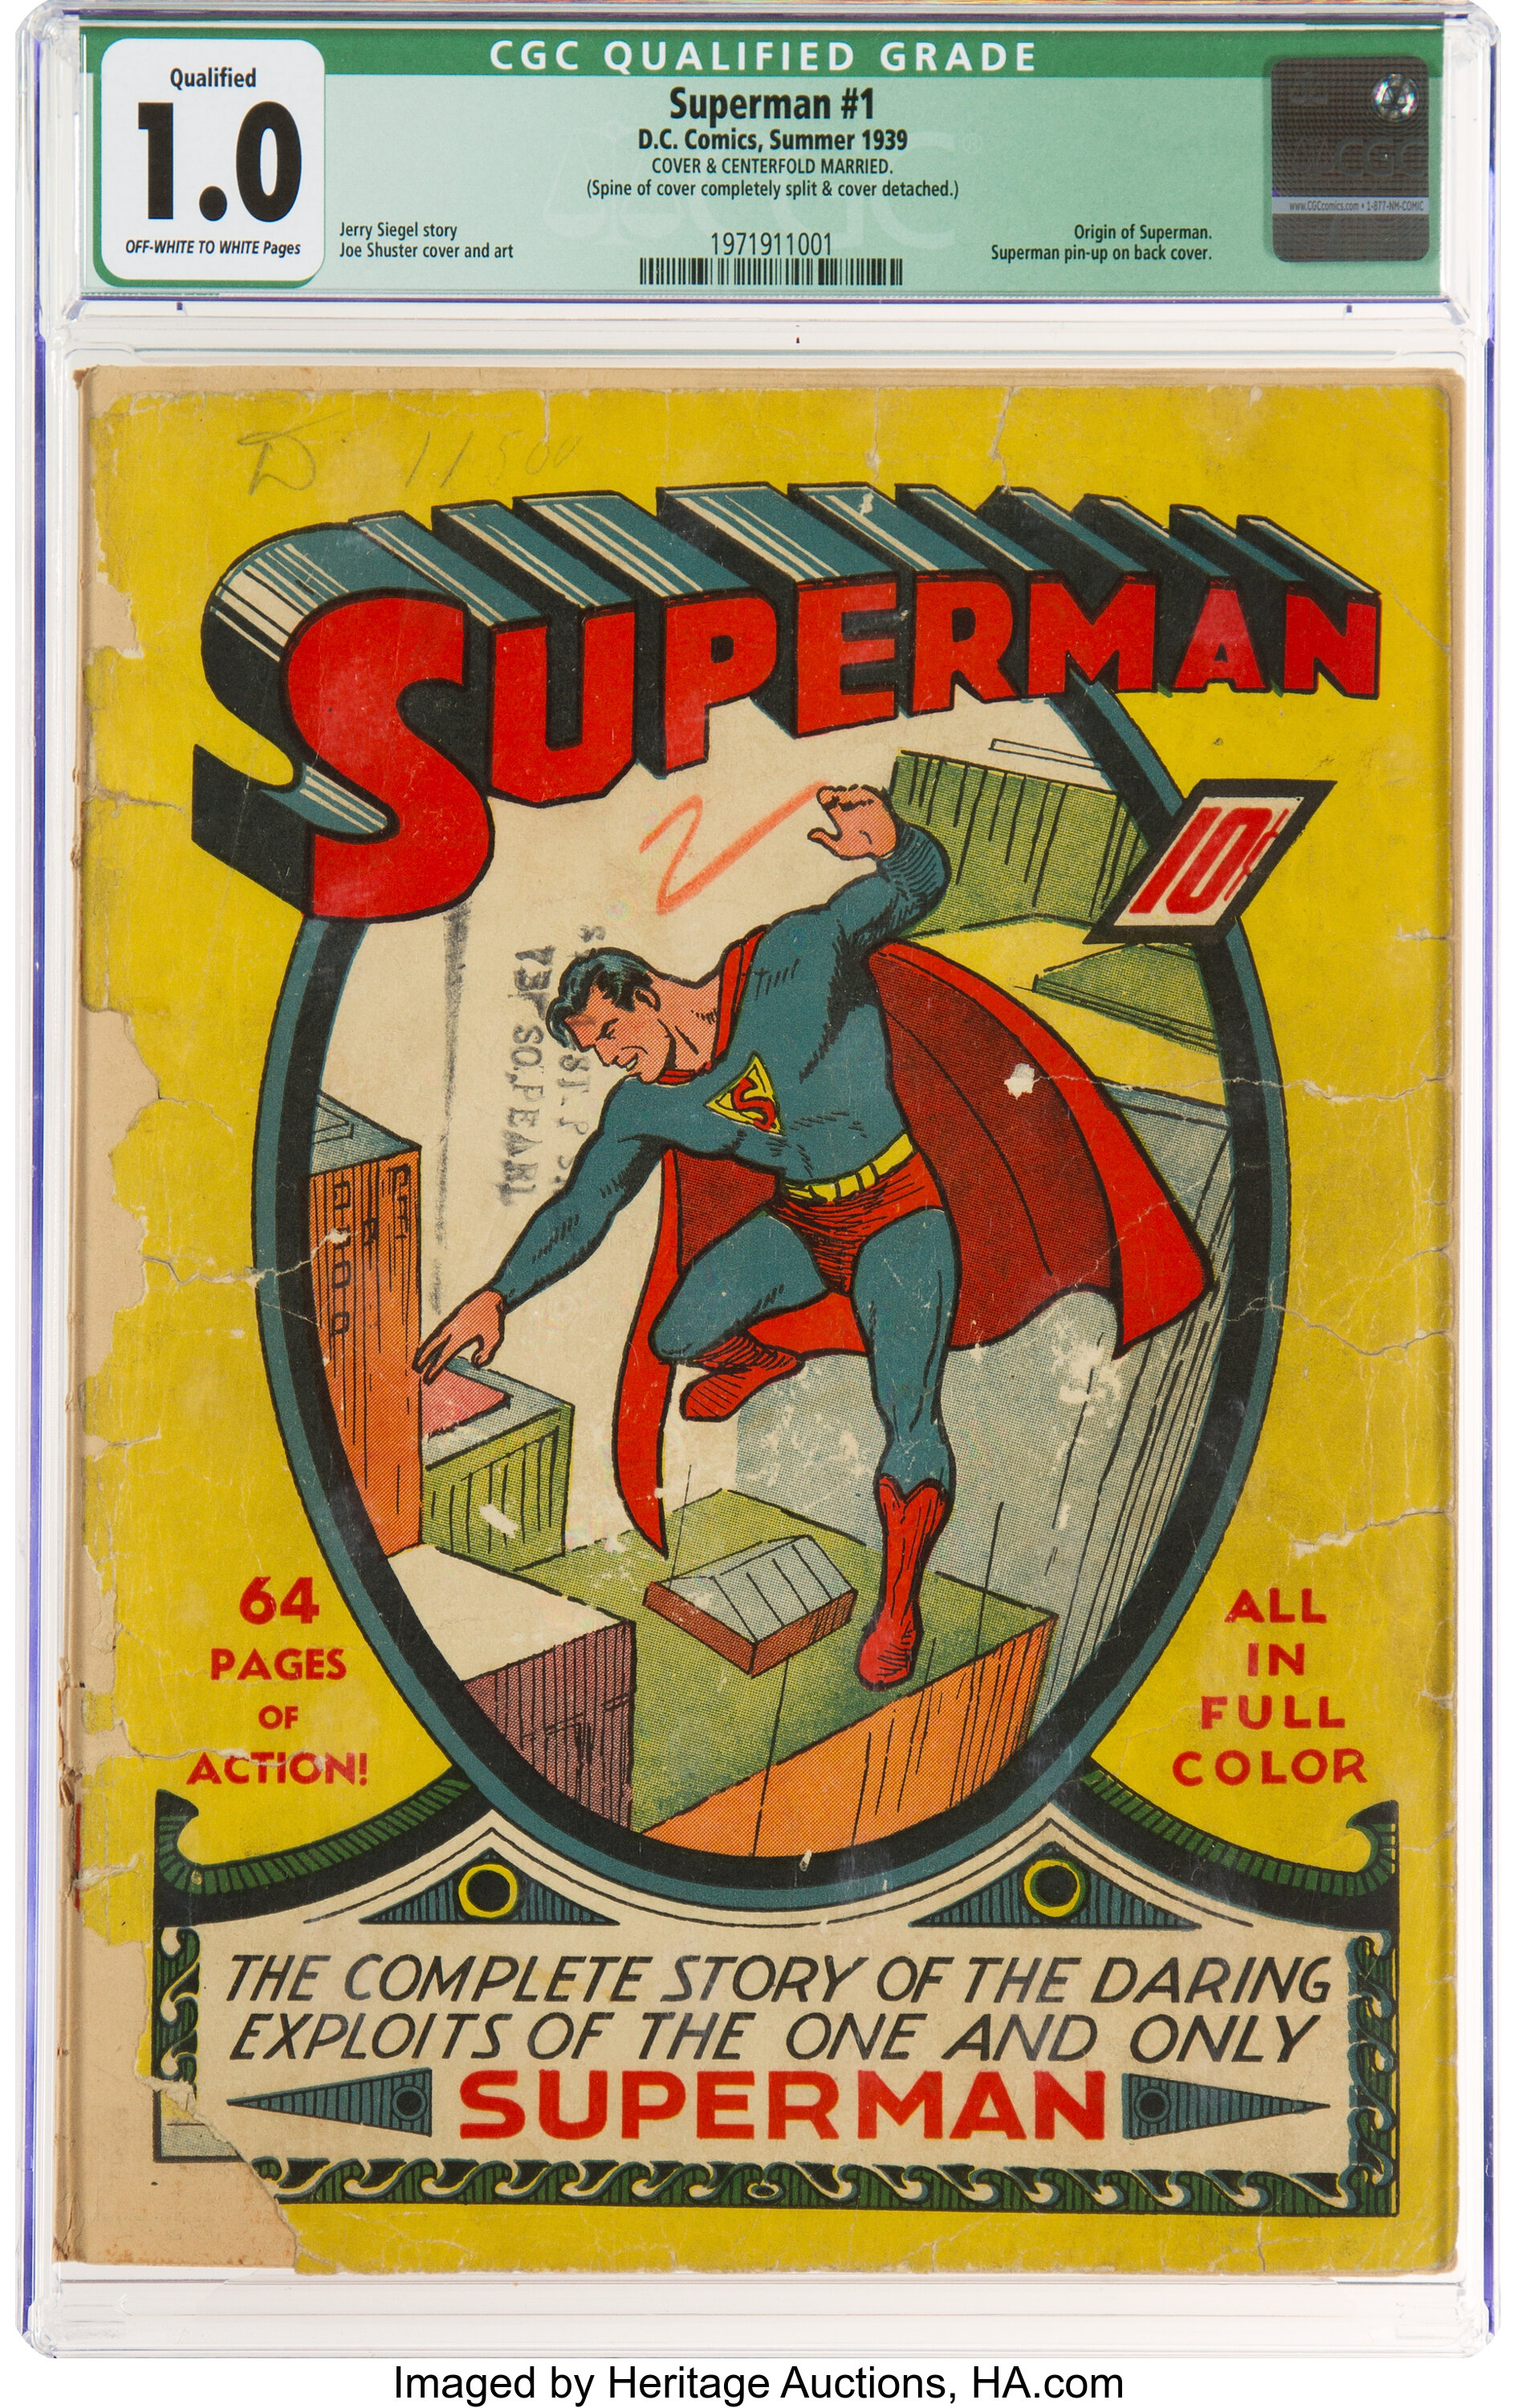 https://www.fortalezadelasoledad.com/imagenes/2022/04/28/heritage_auctions_superman_1_vintage_copy_2022_2.jpg